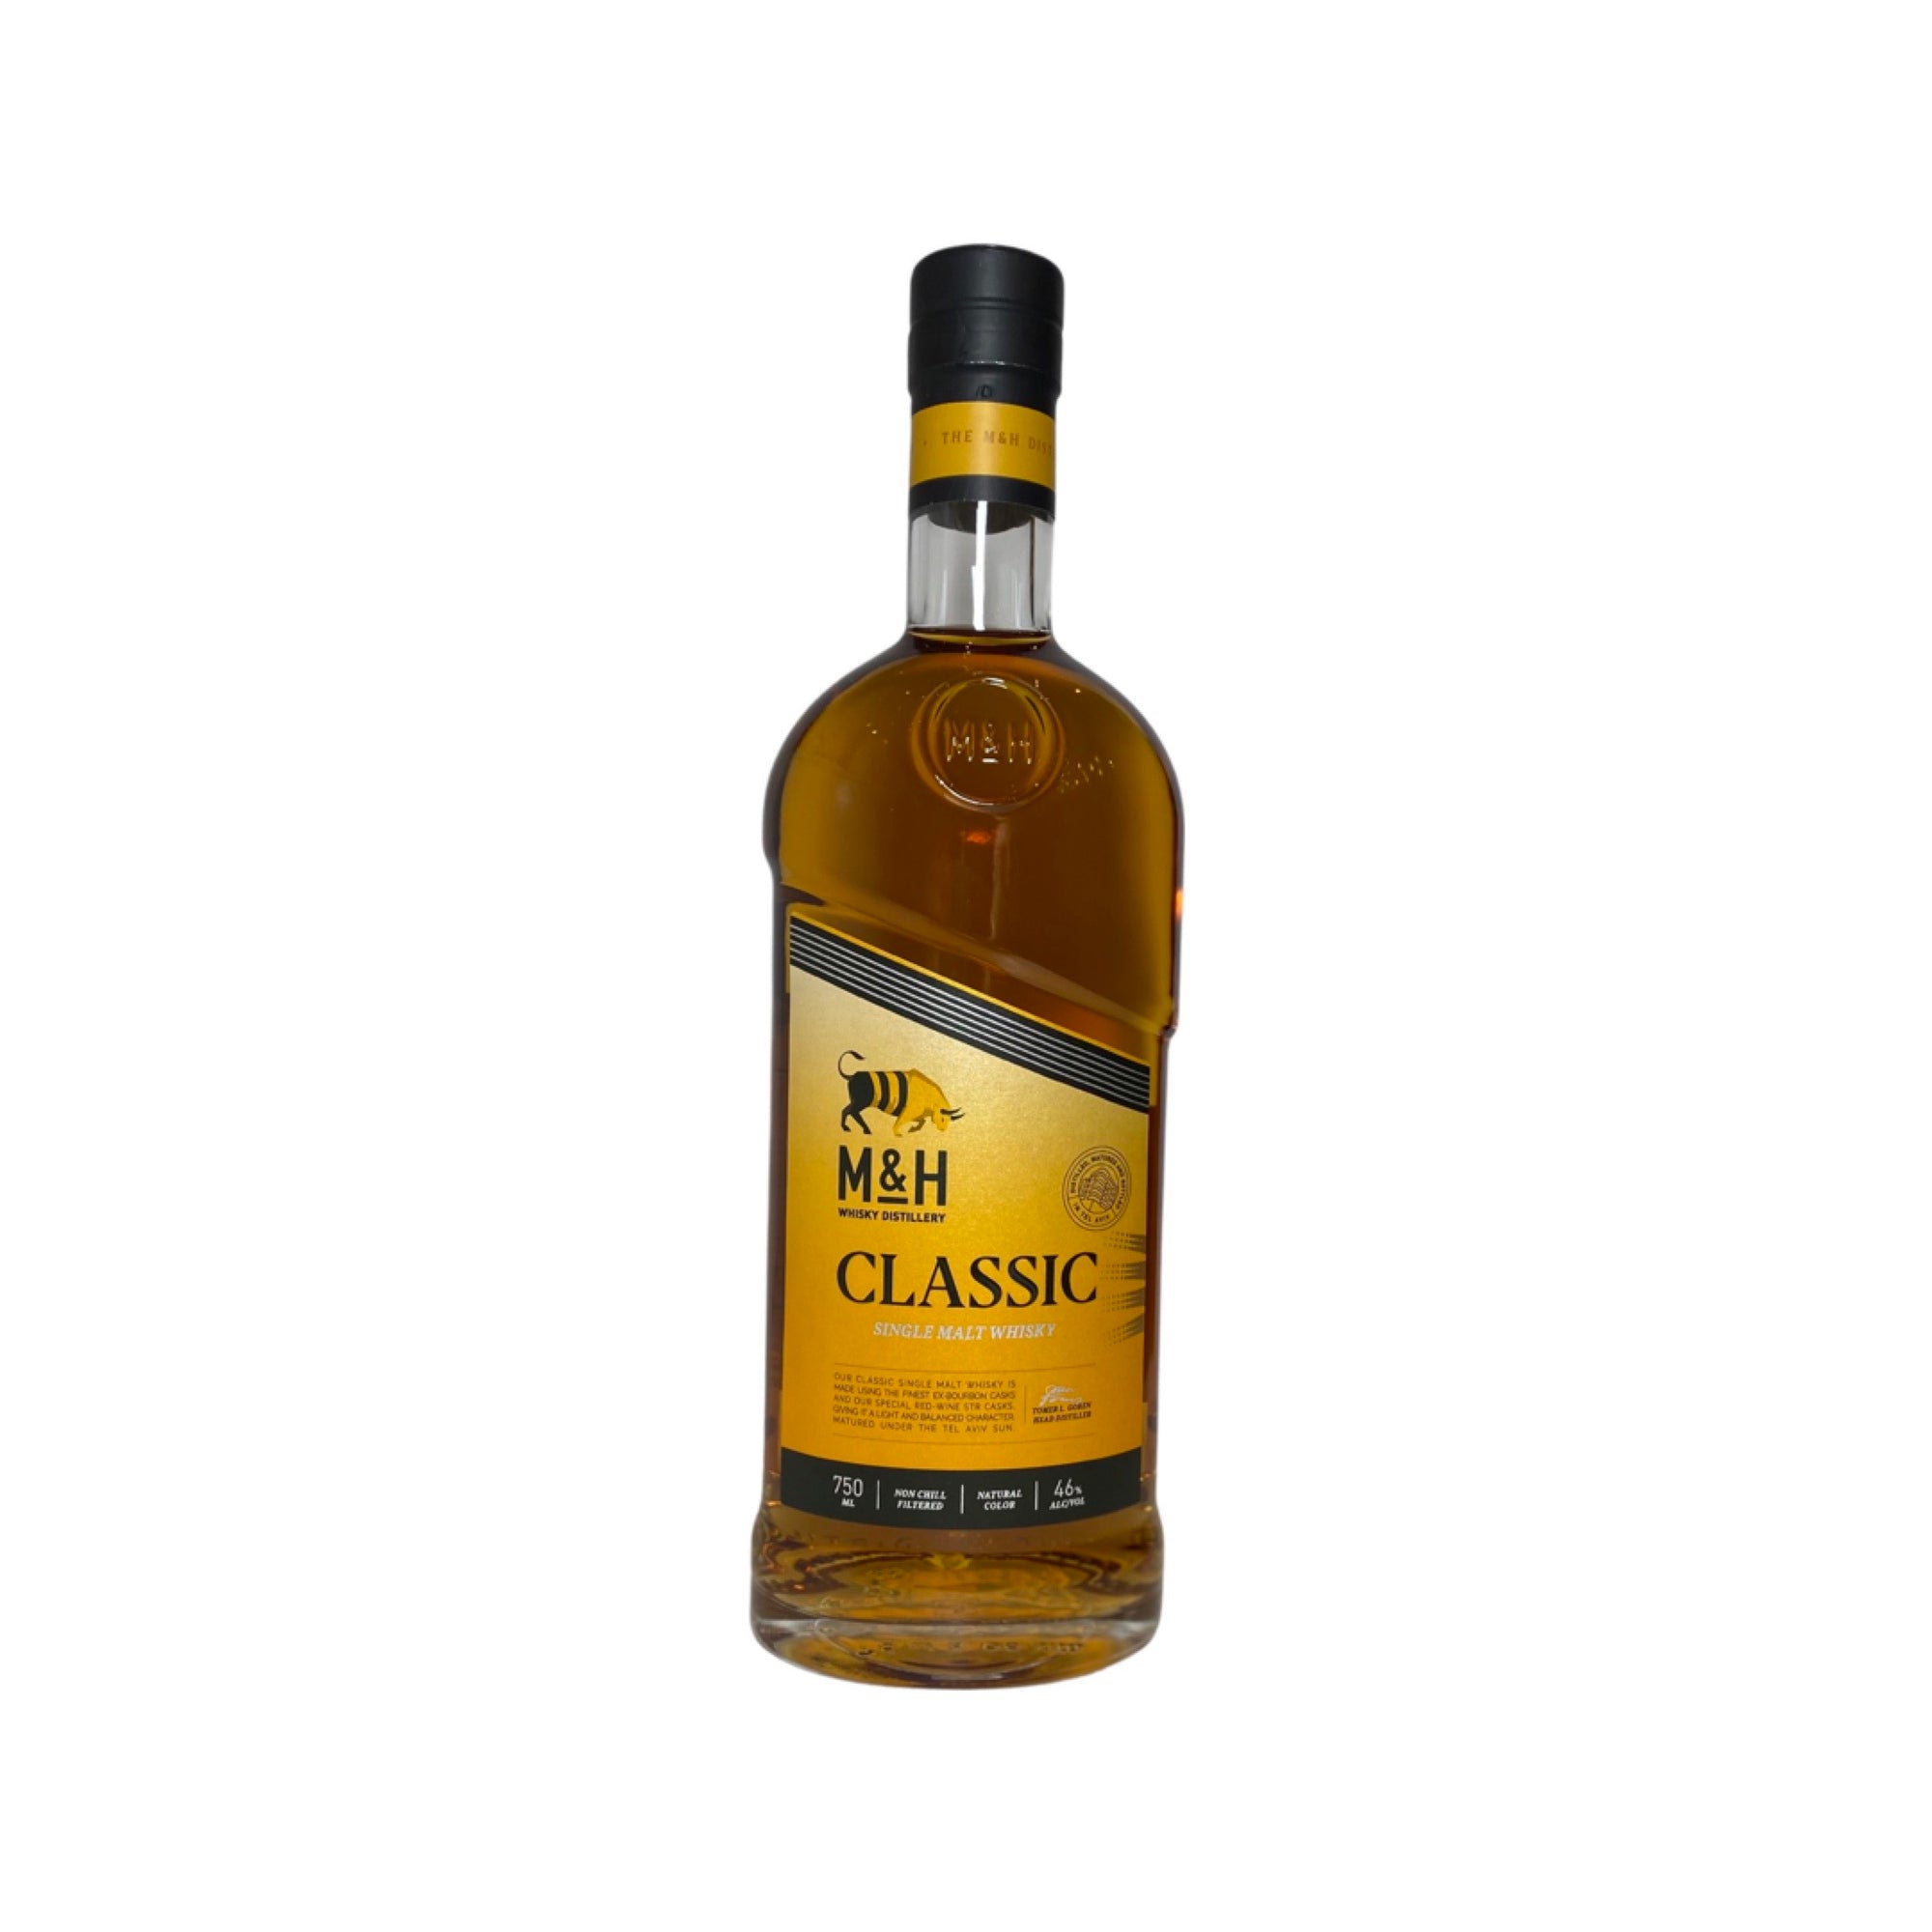 M&H Milk and Honey Distillery "Classic" Single Malt Whisky (Tel Aviv, Israel)